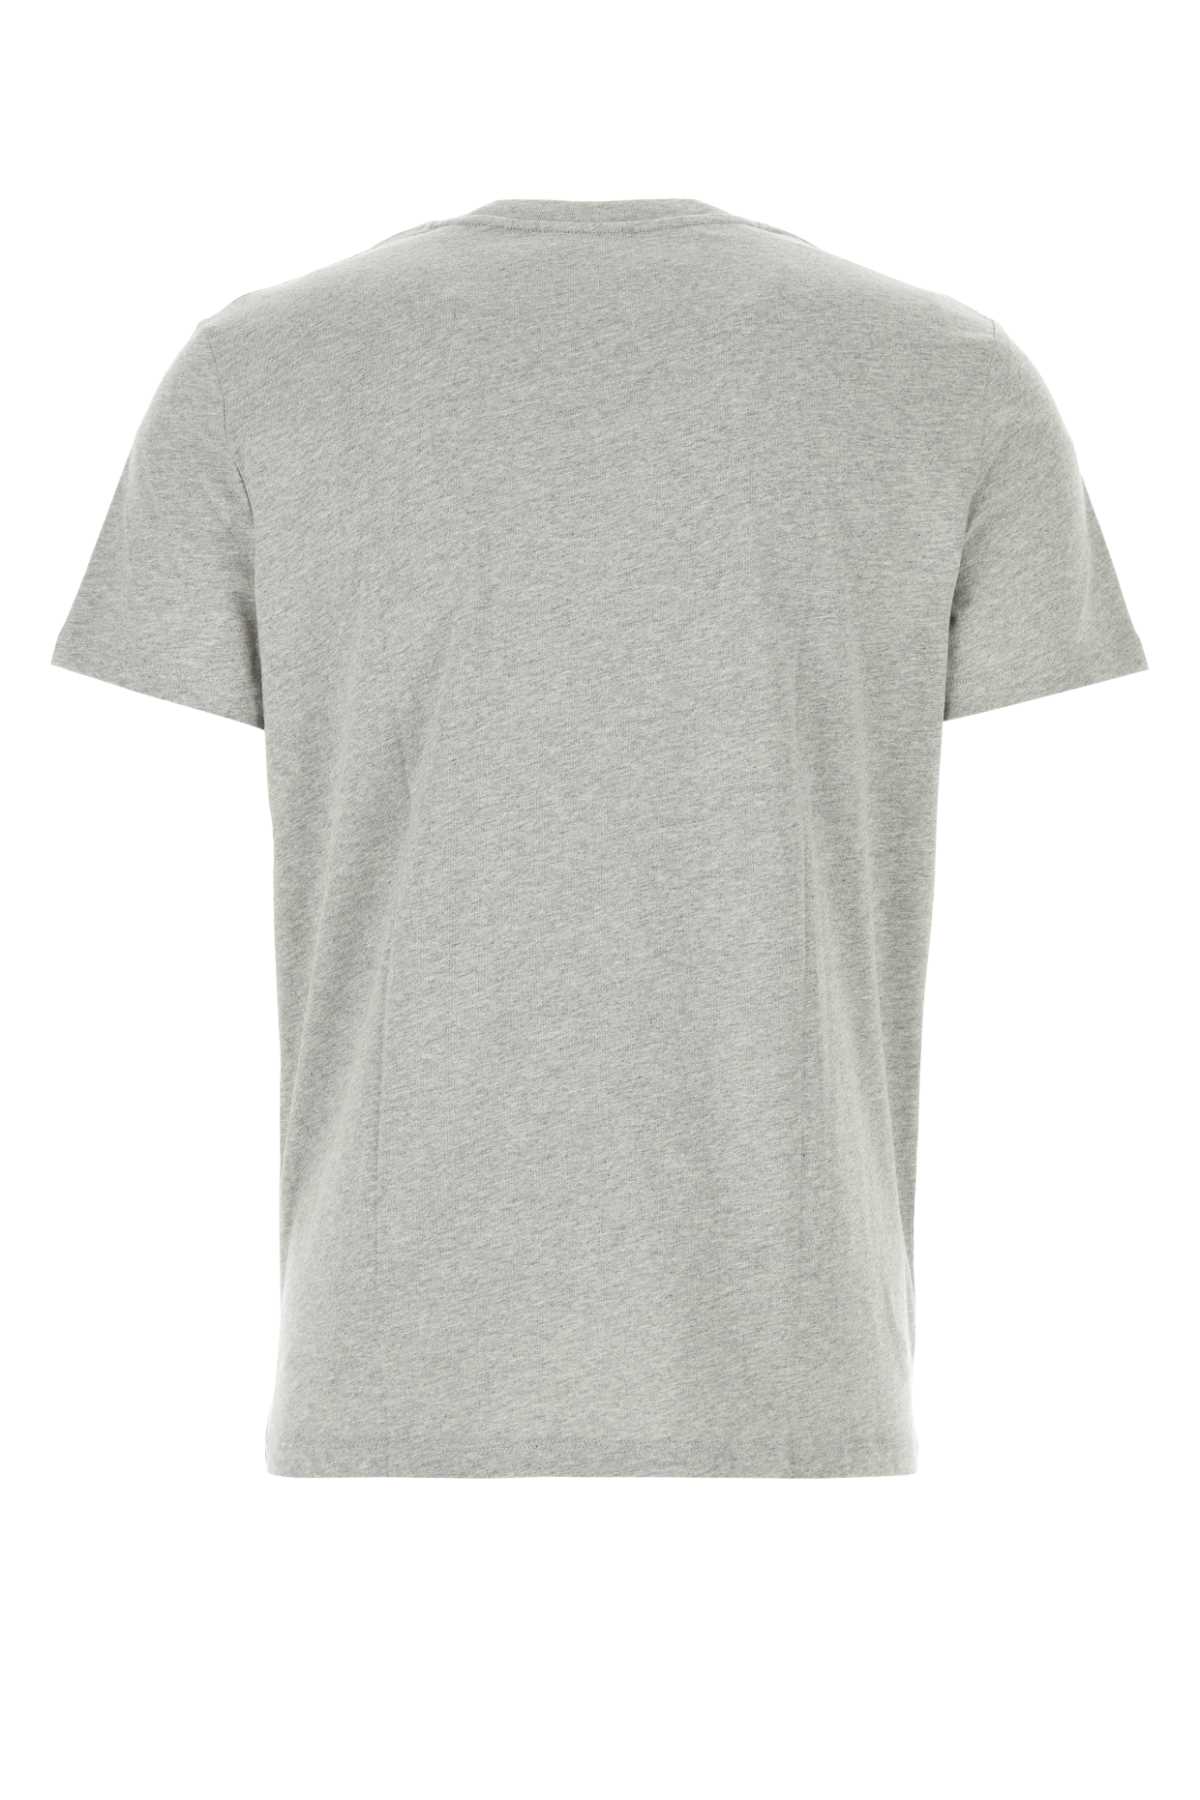 Apc Light Grey Cotton Vpc T-shirt In White